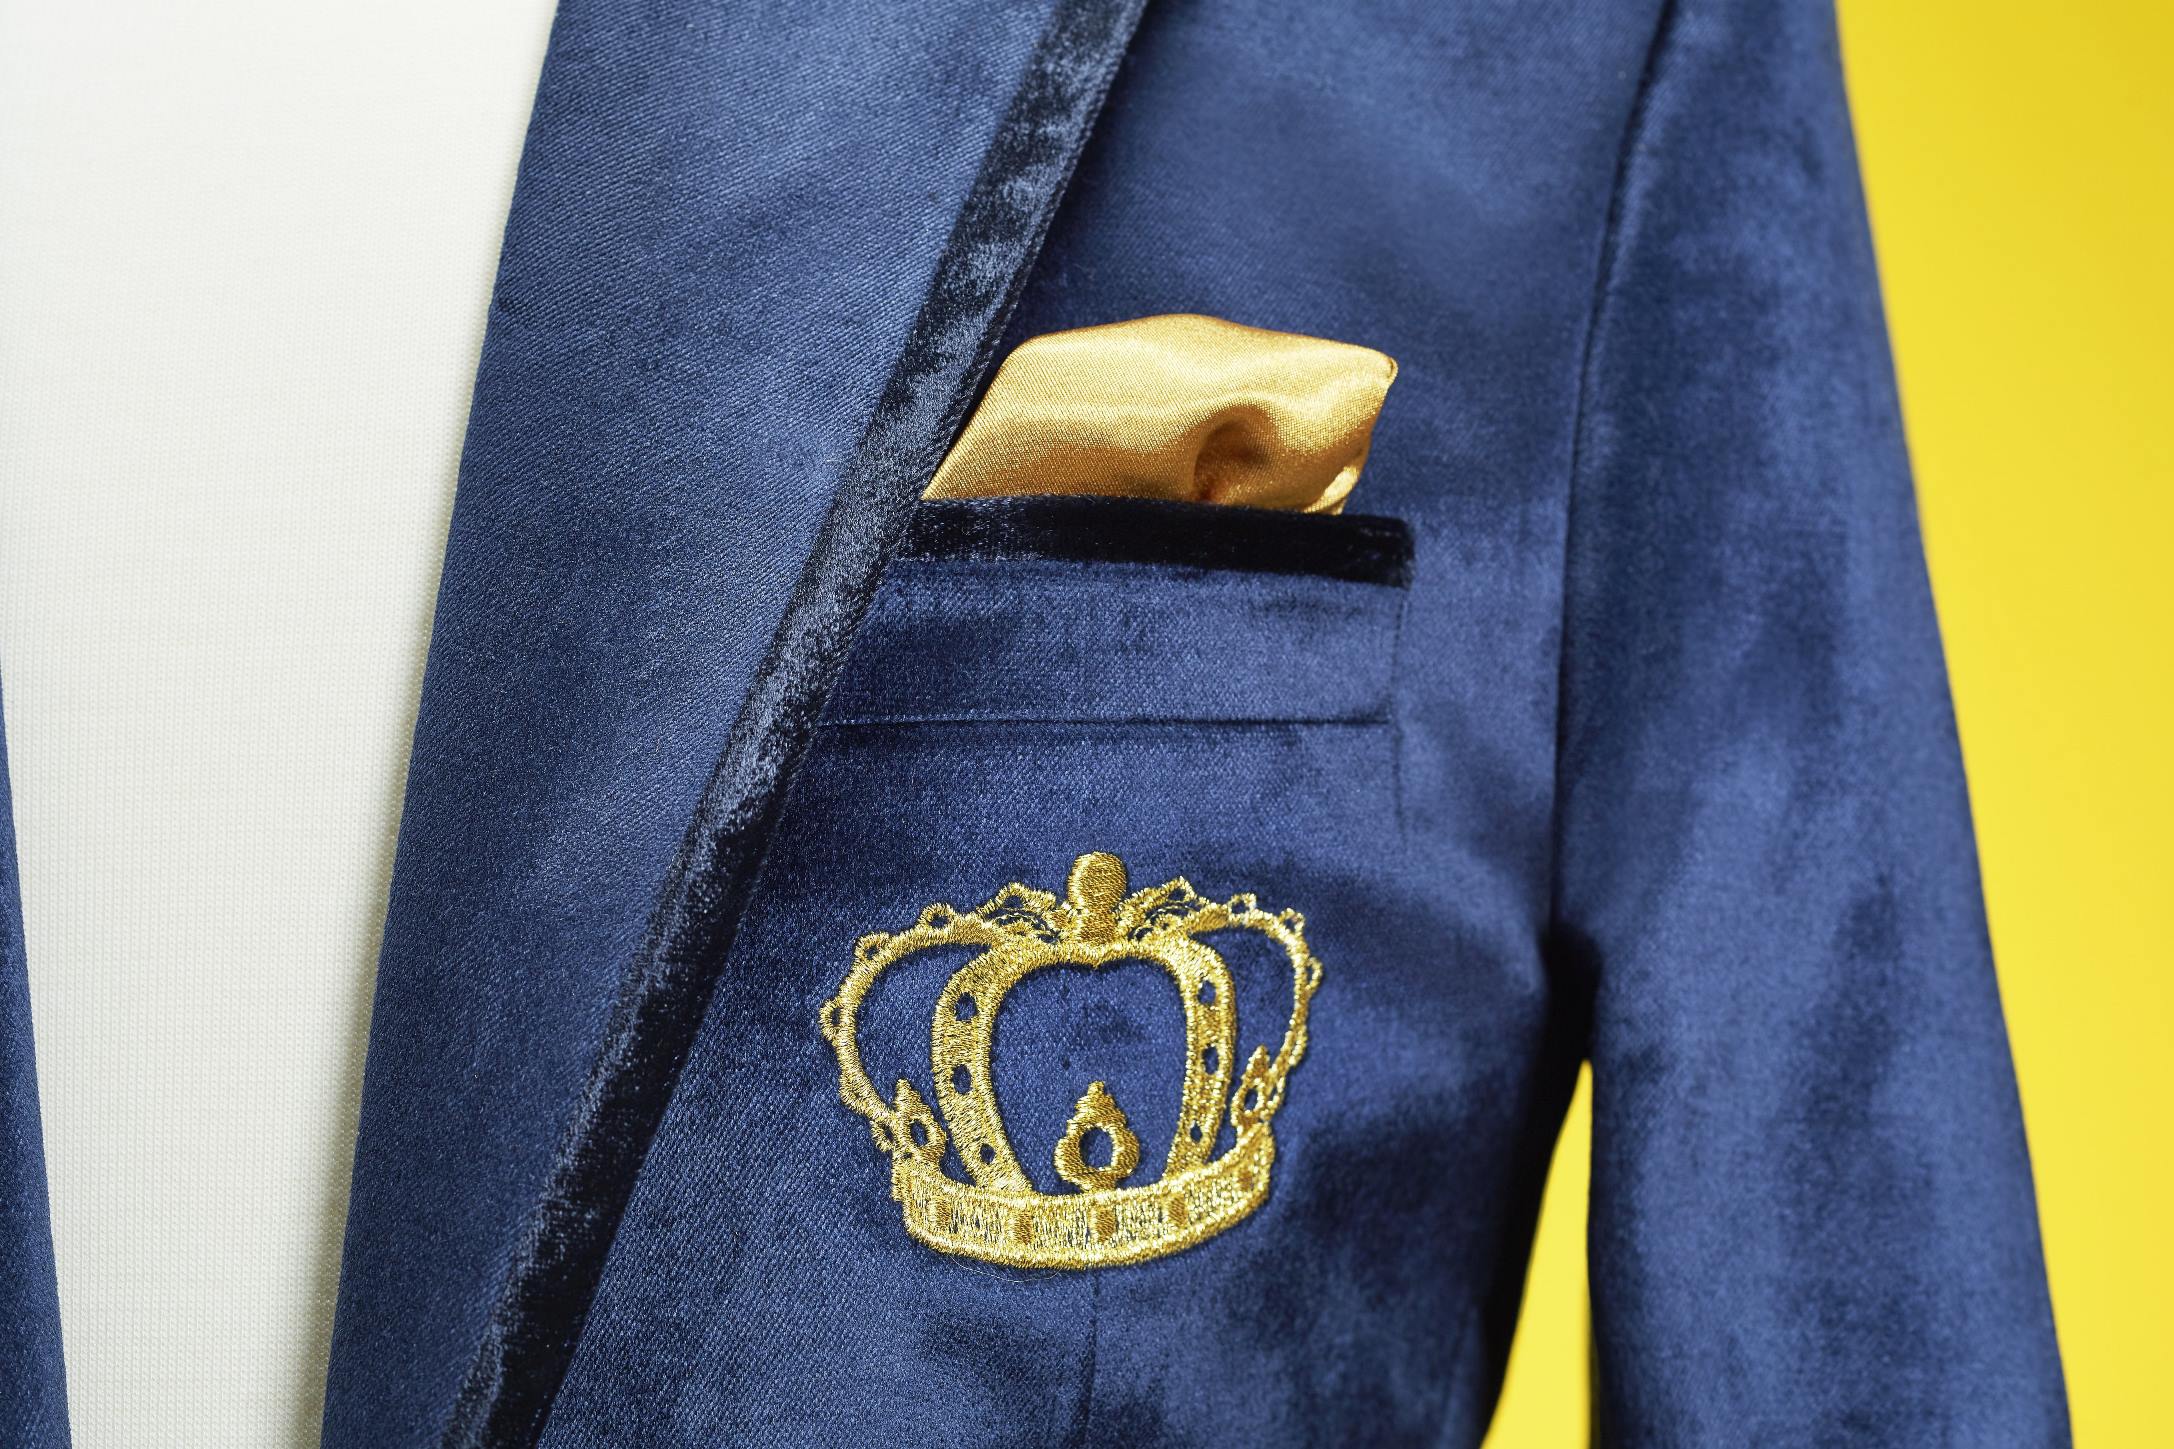 Crown Royal XR Bespoke “sipping” blazer